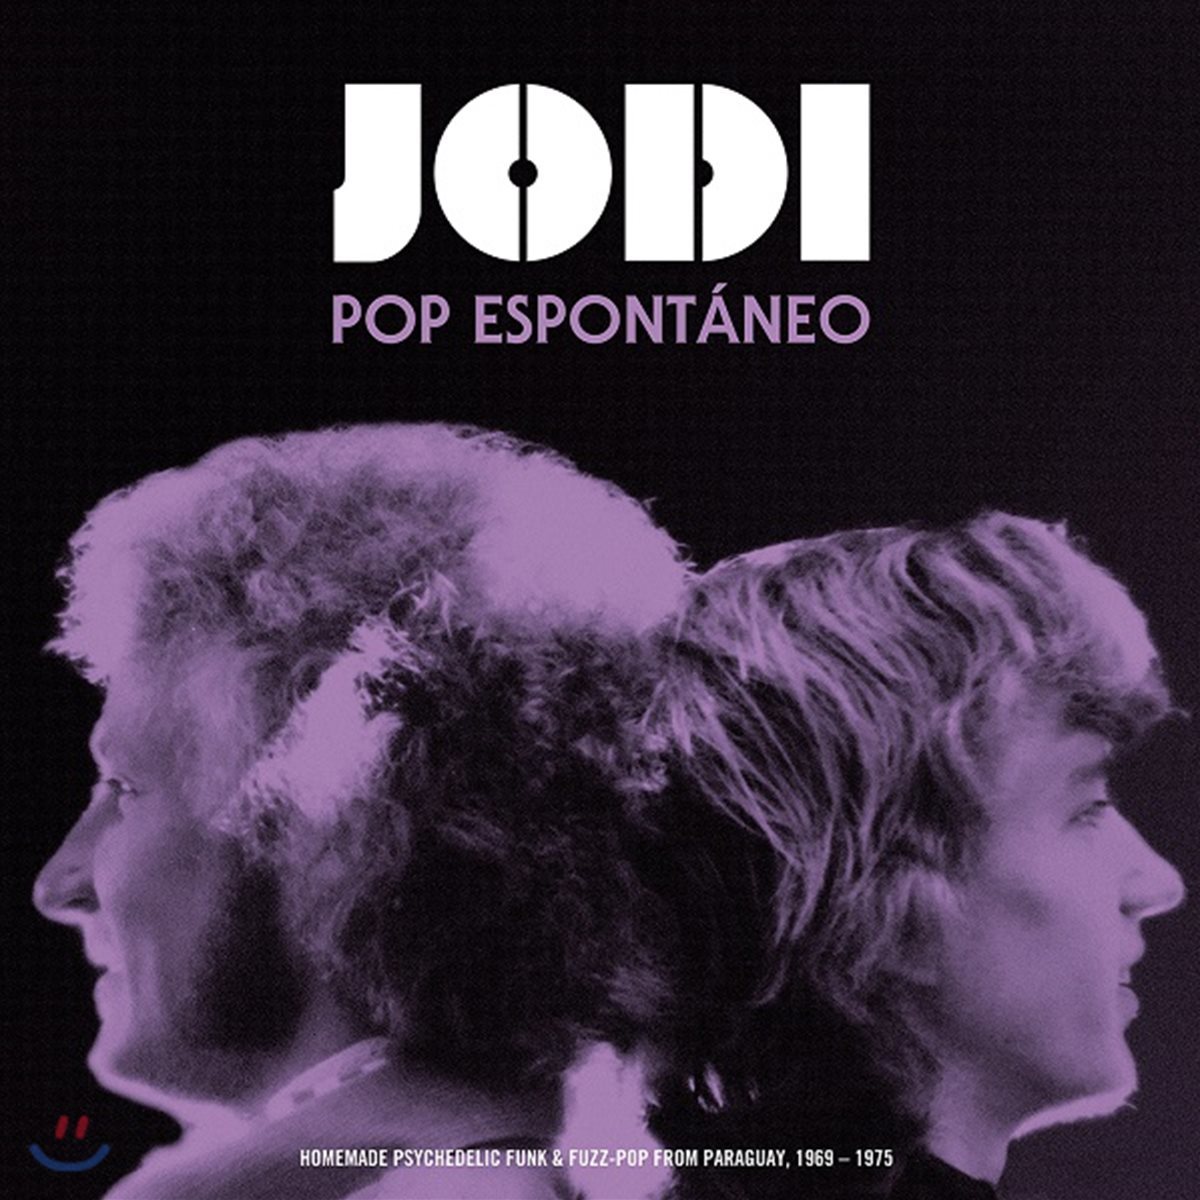 Jodi - Pop Espontaneo [LP]